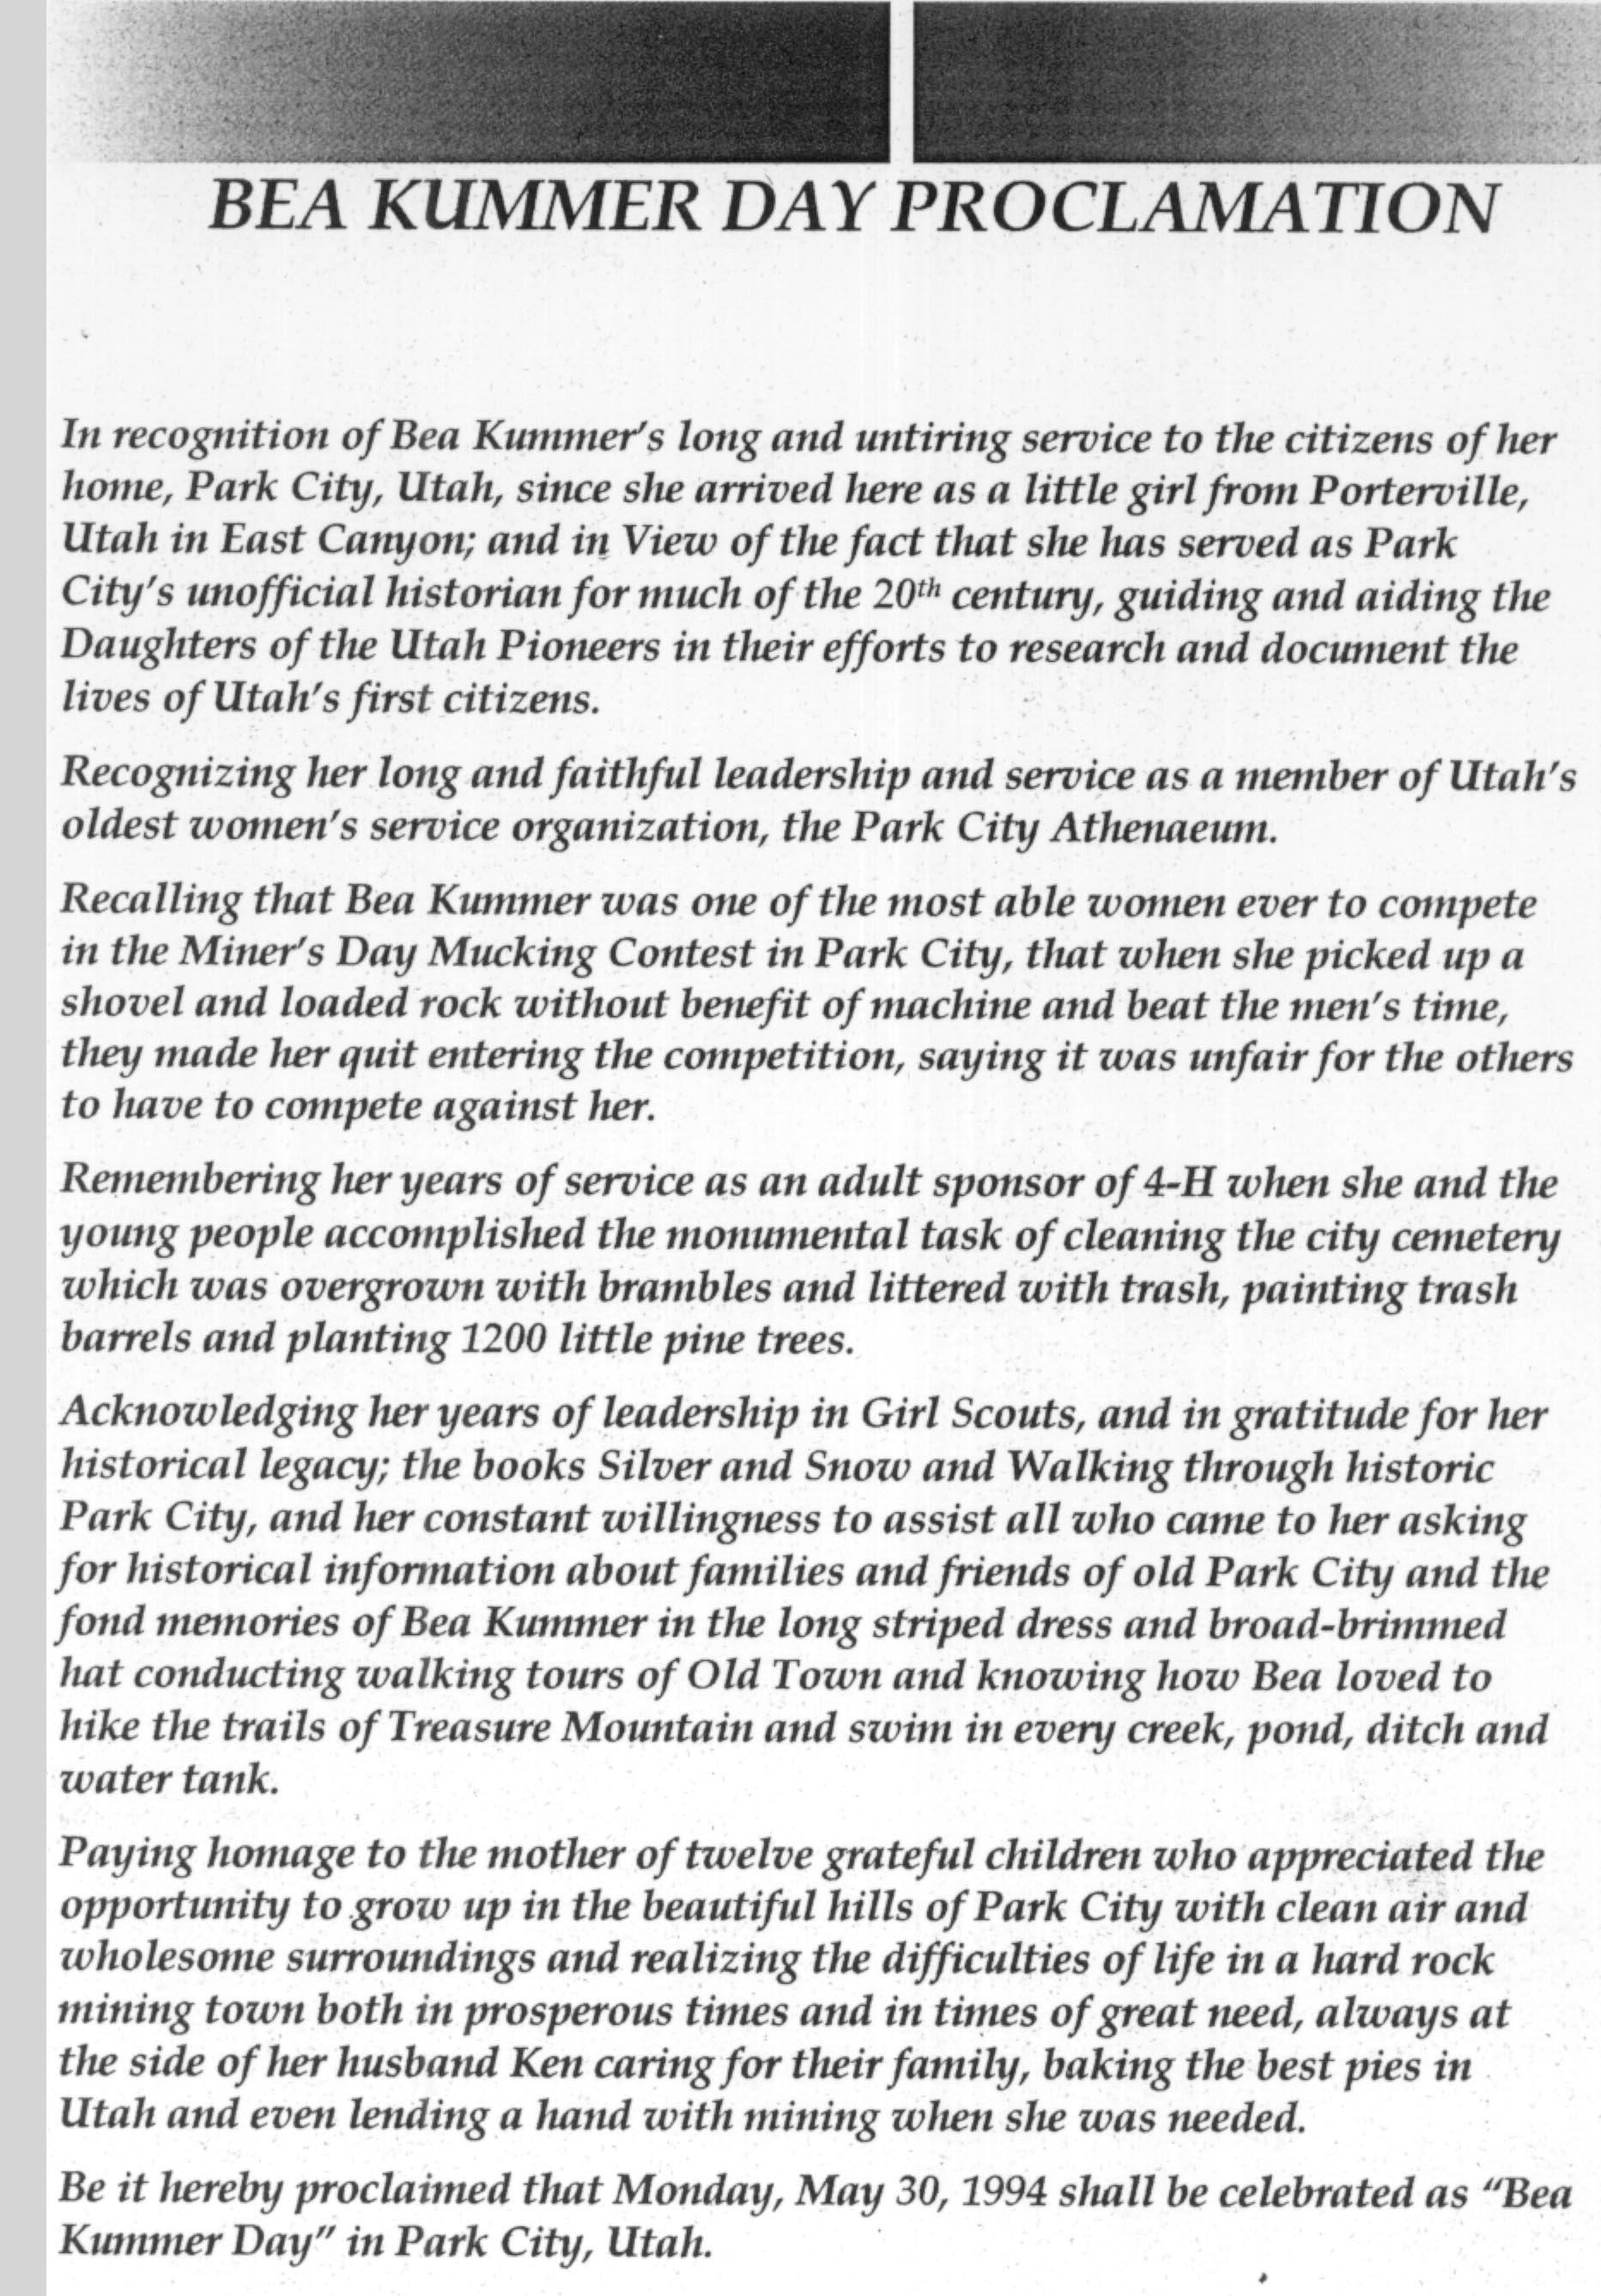 Bea Kummer Day May 30 Proclamation